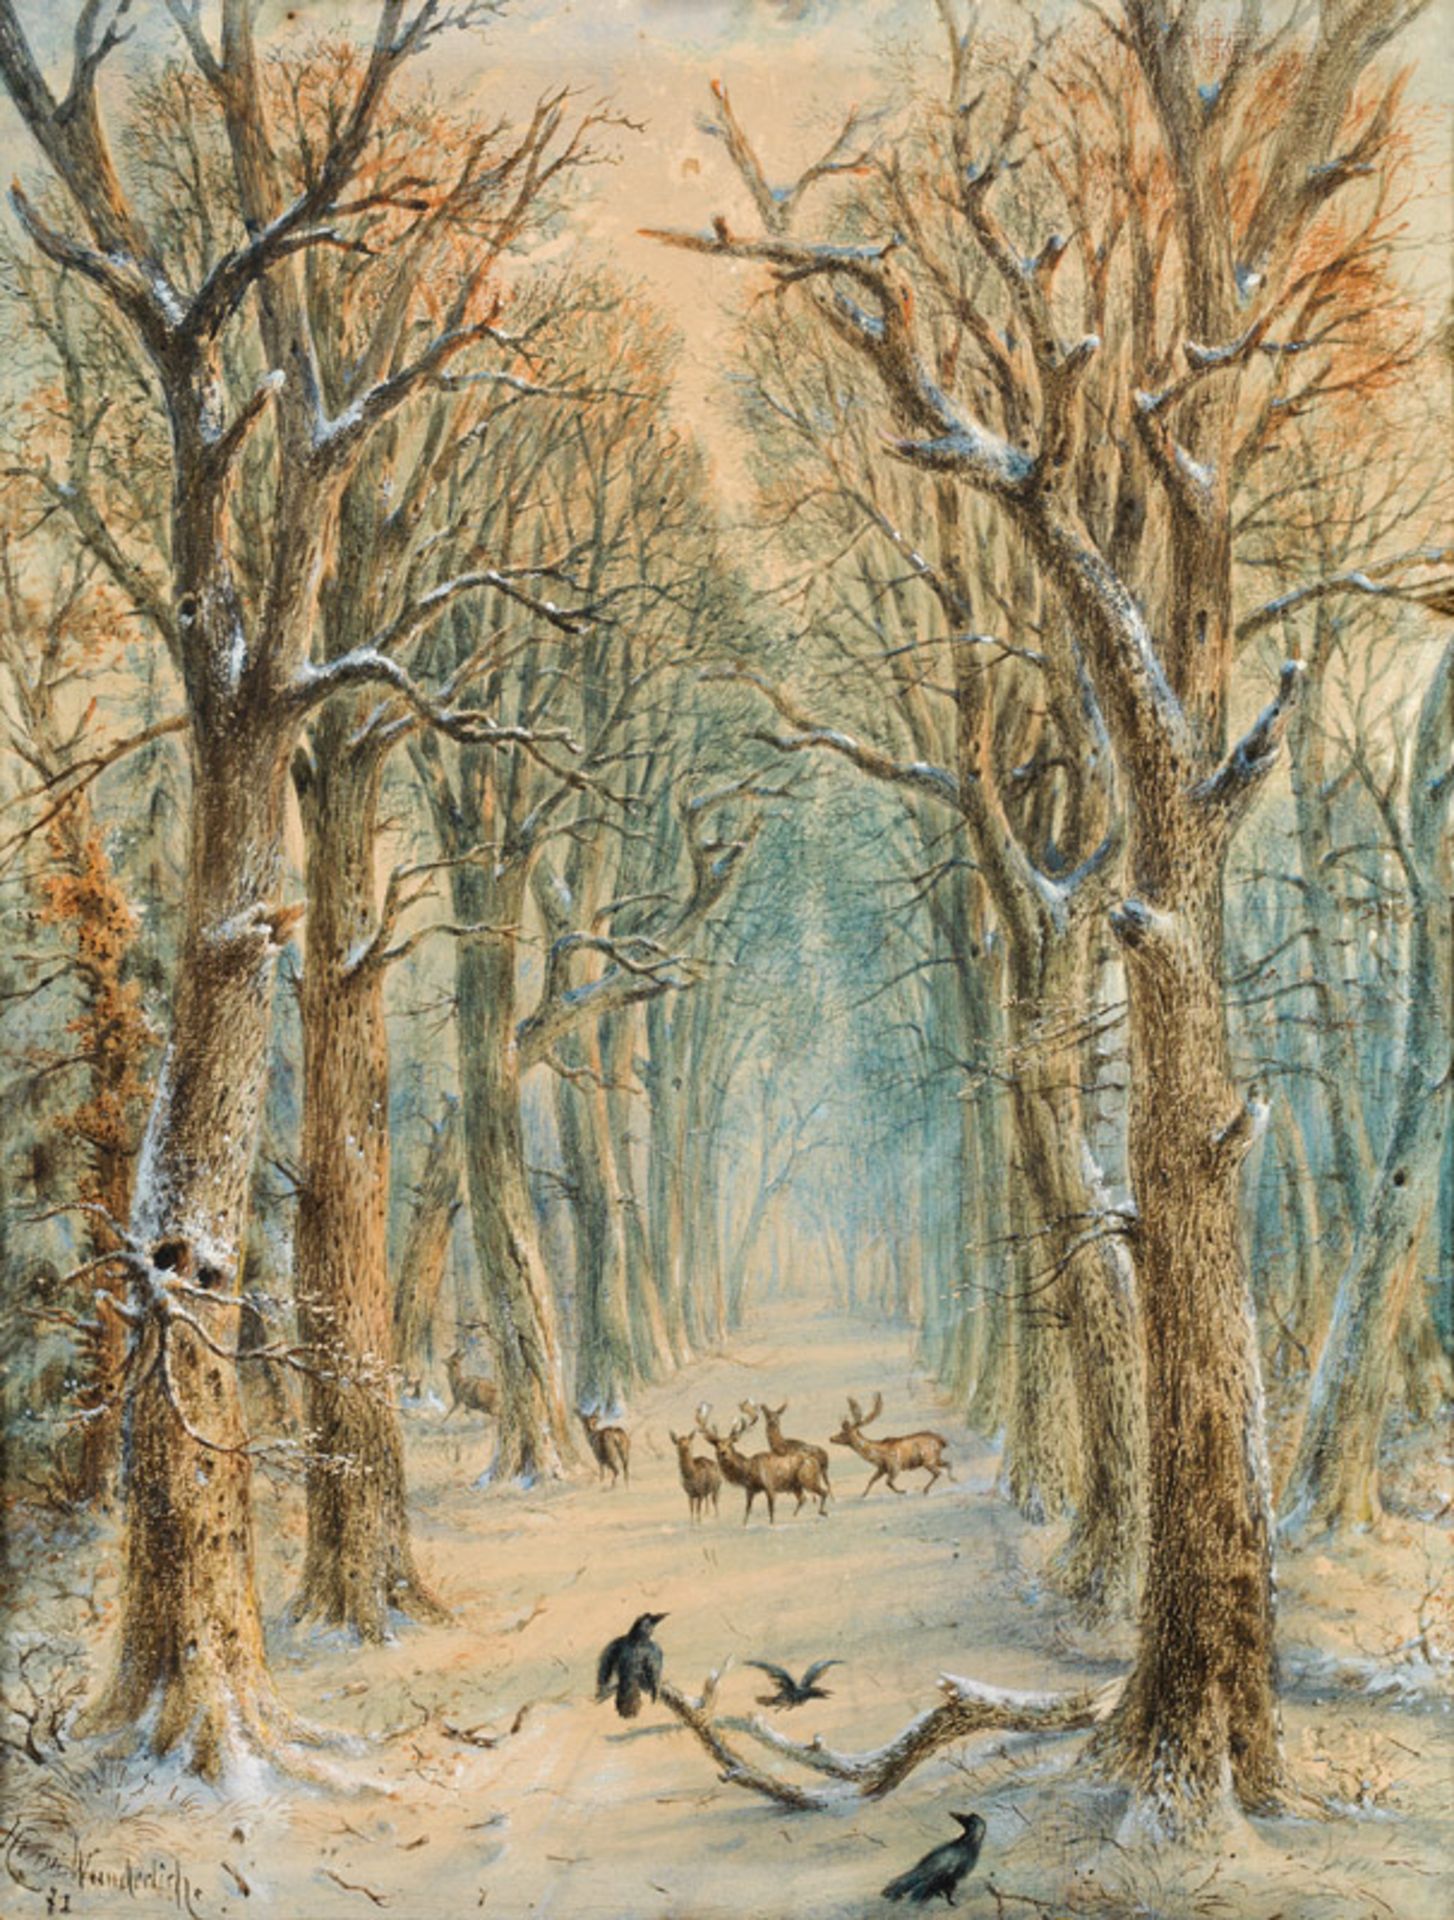 Hermann Moritz Wunderlich Stags in a forest in winter, 1871